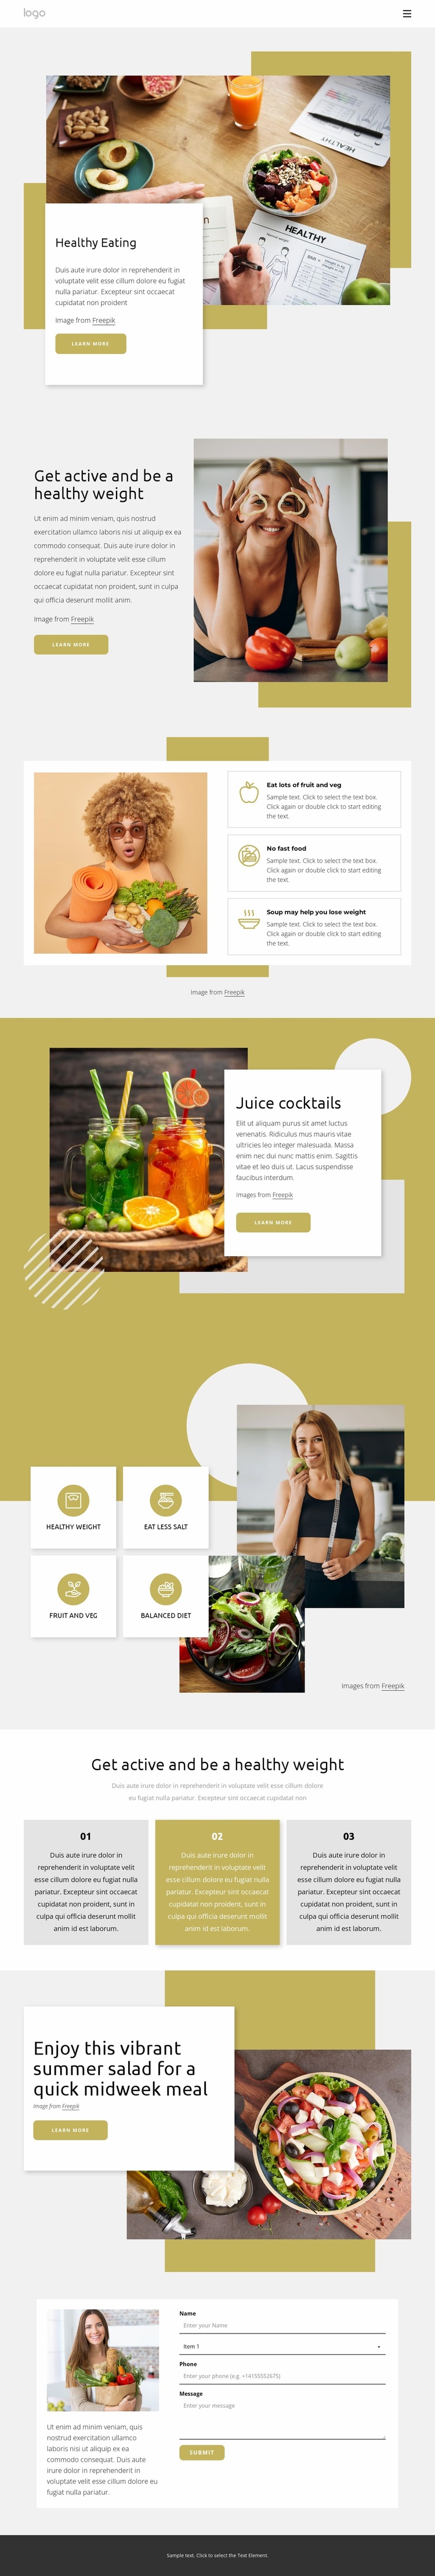 Focus on healthy eating Website Design